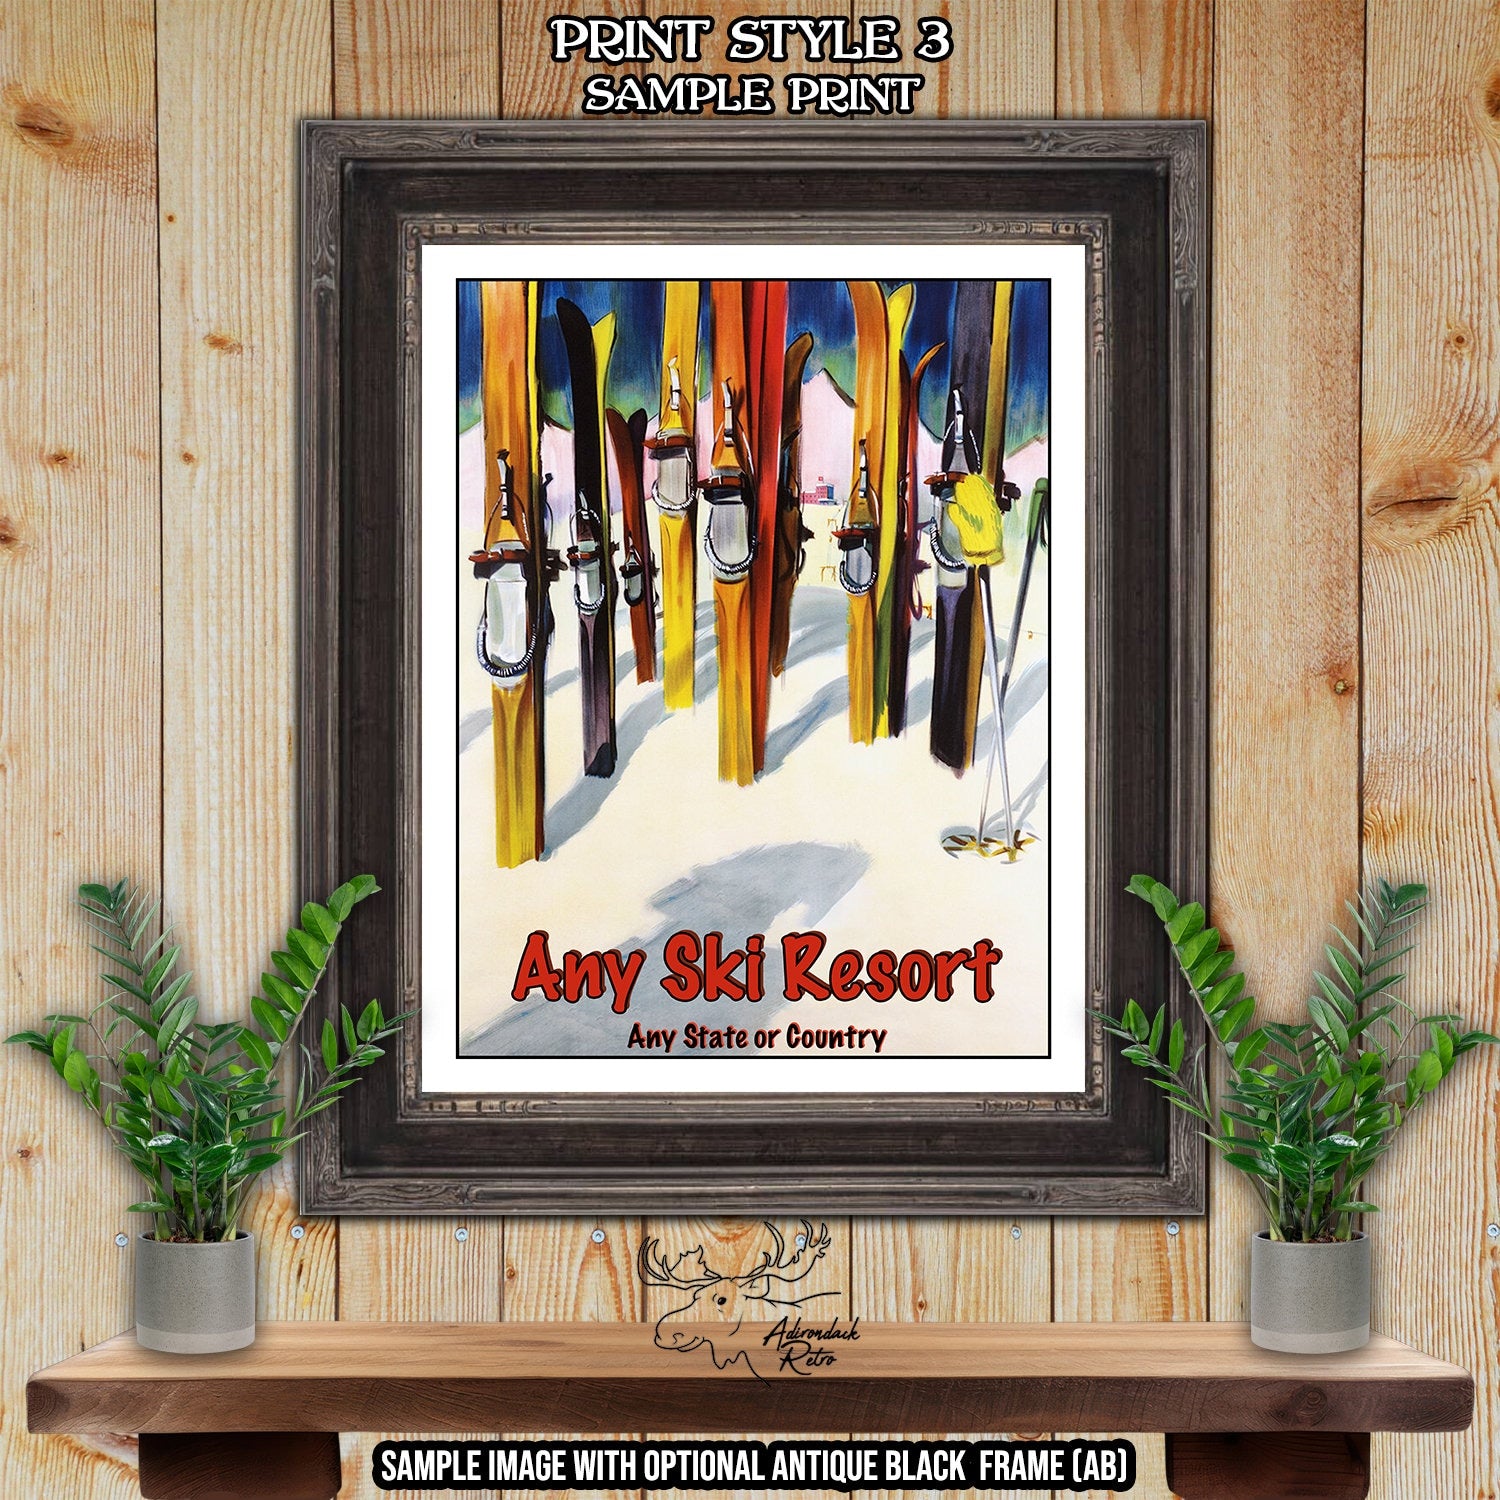 Alyeska Ski Resort Print - Retro Alaska Ski Resort Poster